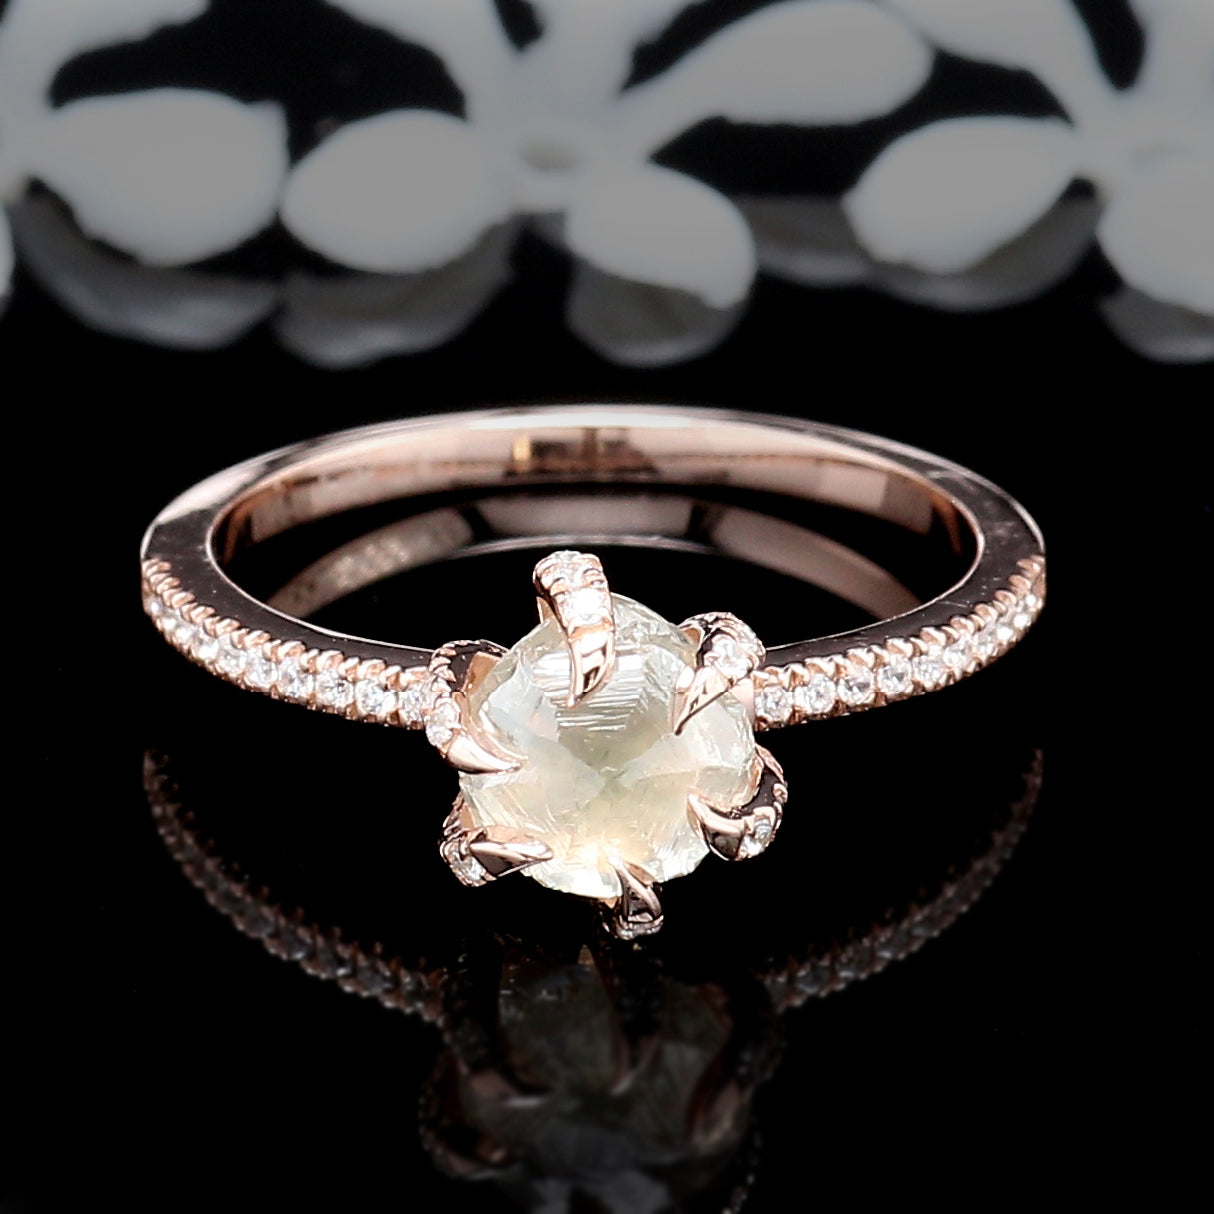 Grey Rough Diamond 14K Solid Rose White Yellow Gold Ring Engagement Wedding Gift Ring KD884